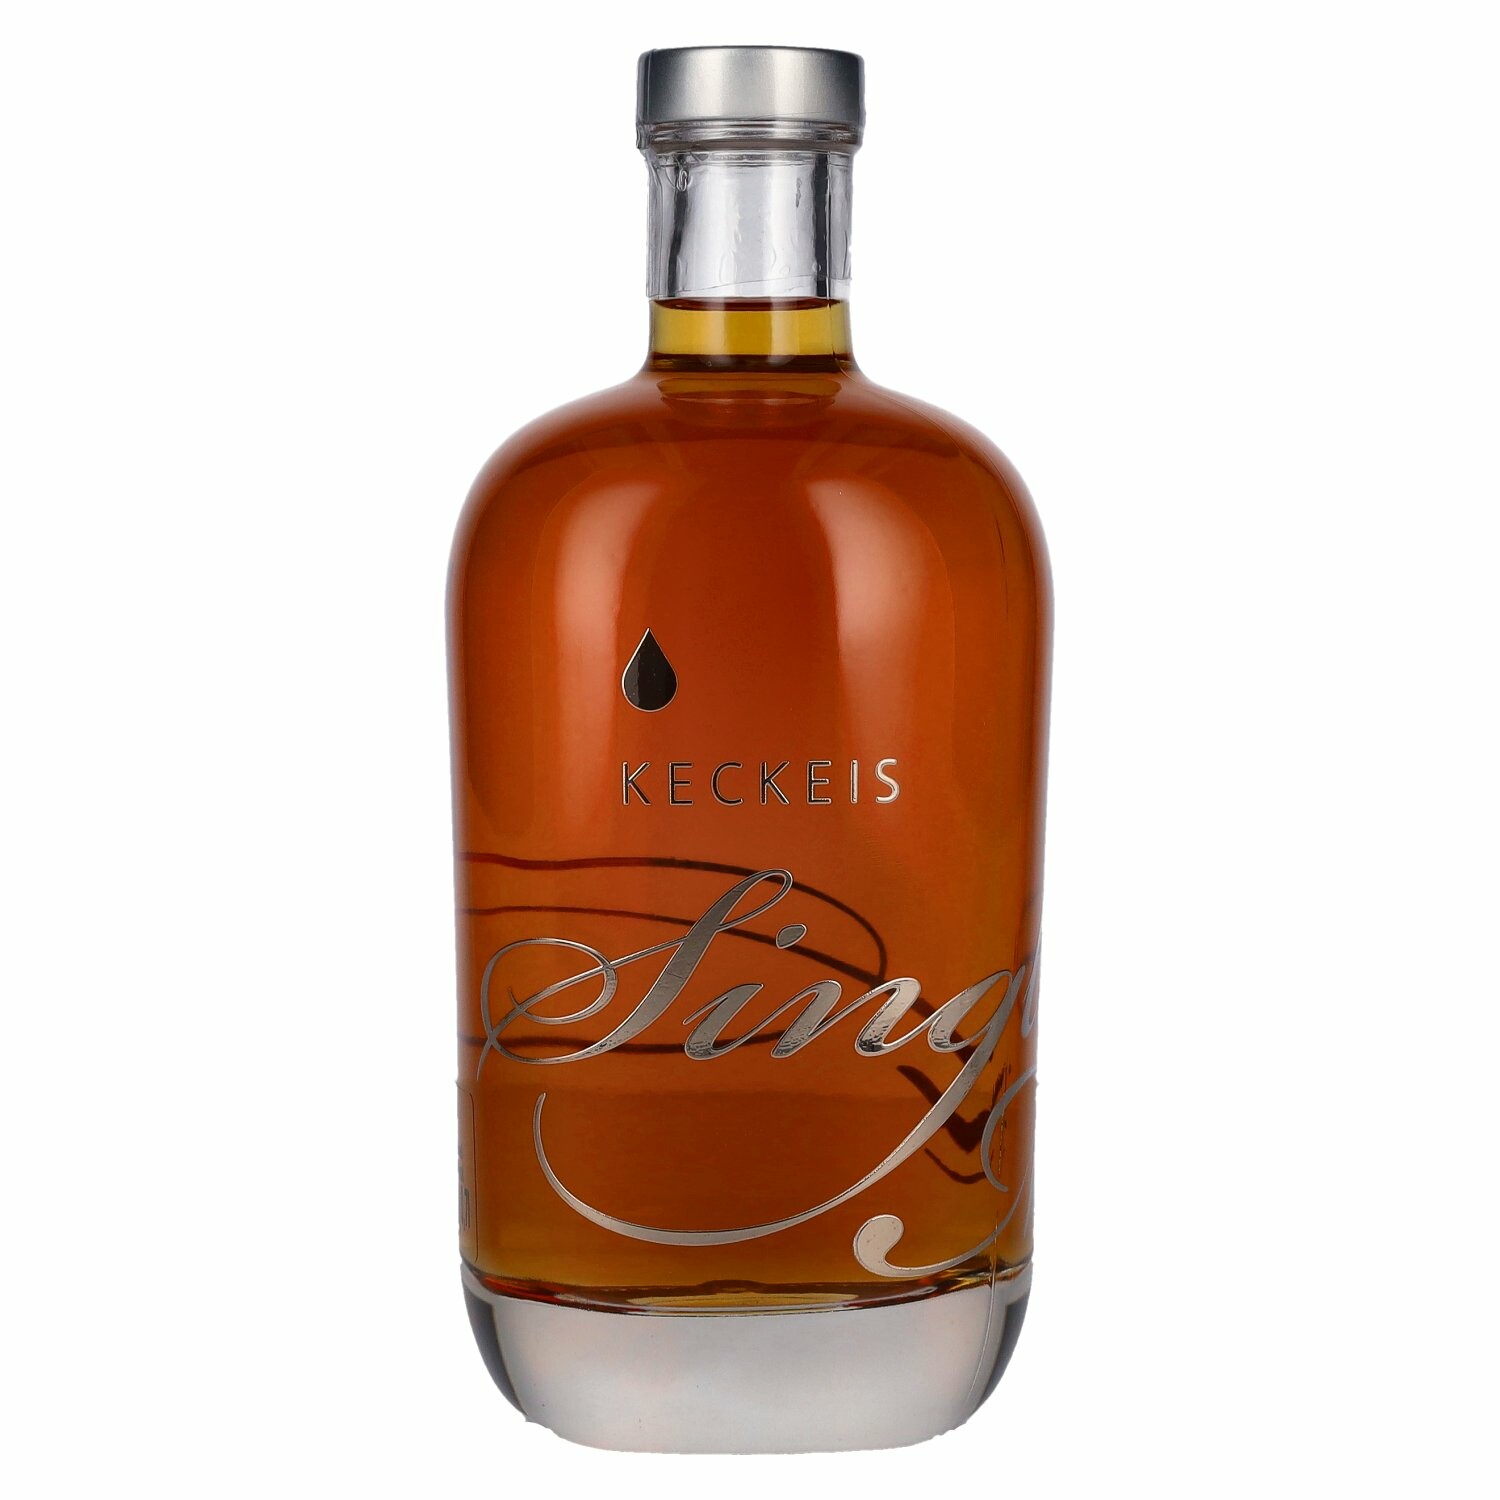 Keckeis Single Malt Whisky 42% Vol. 0,7l